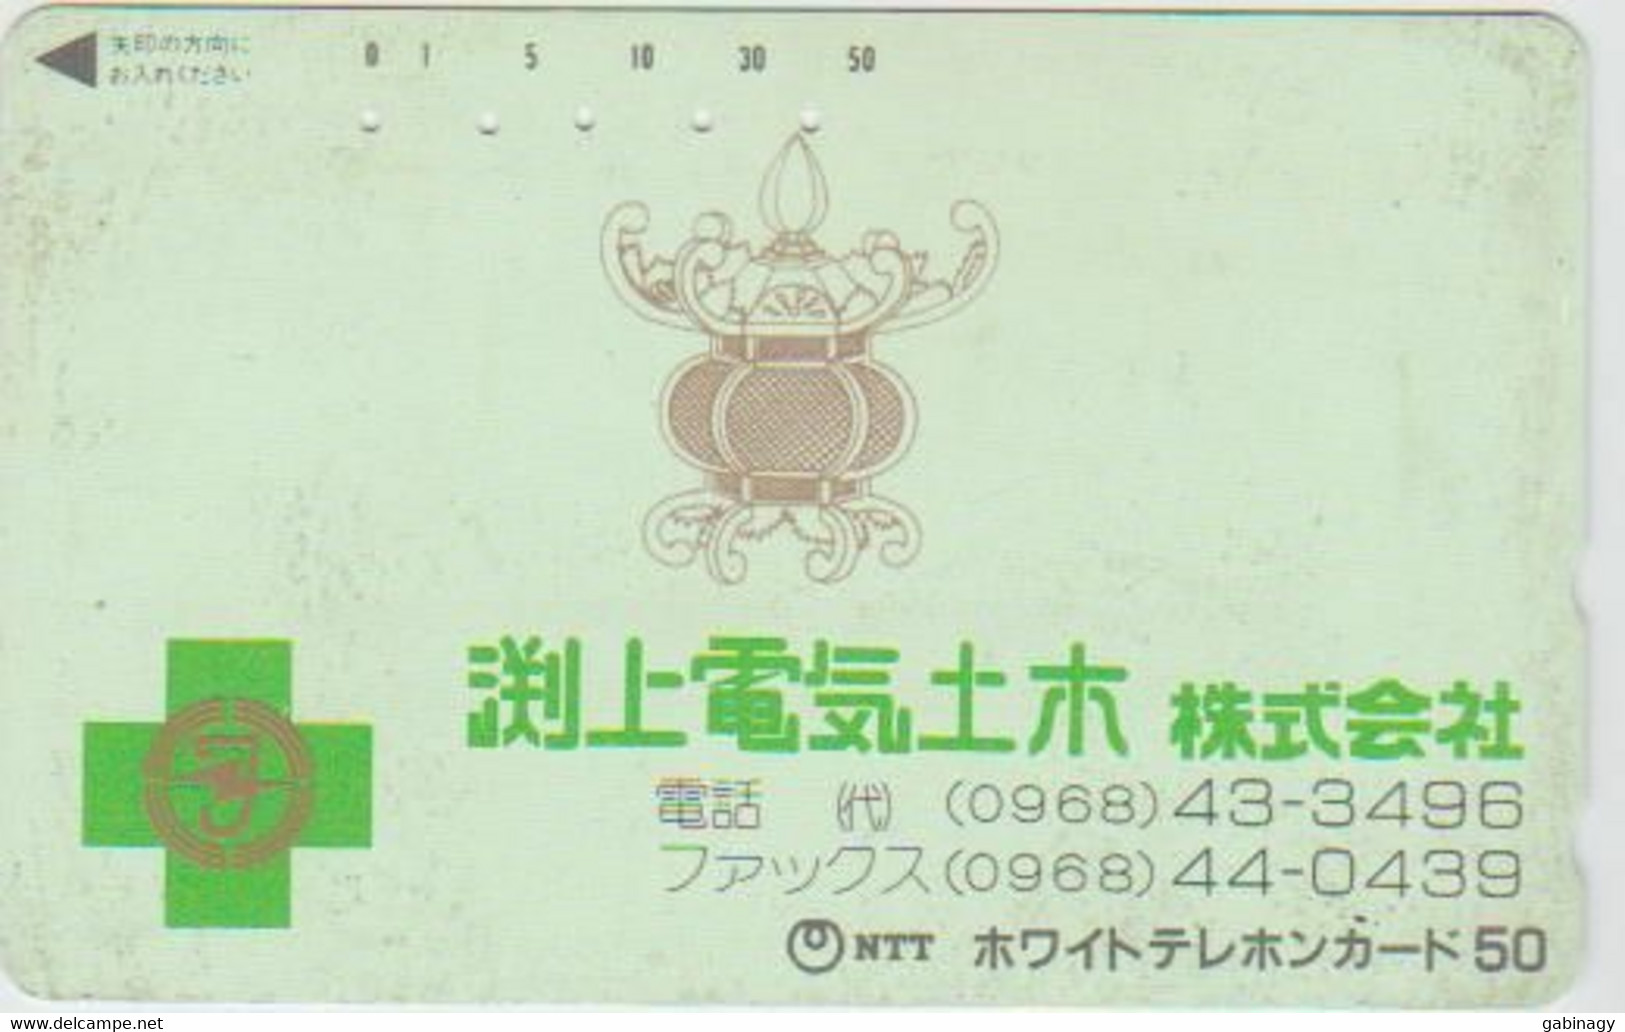 HEALTH - JAPAN-032 - GREEN CROSS - 110-011 - Cultural